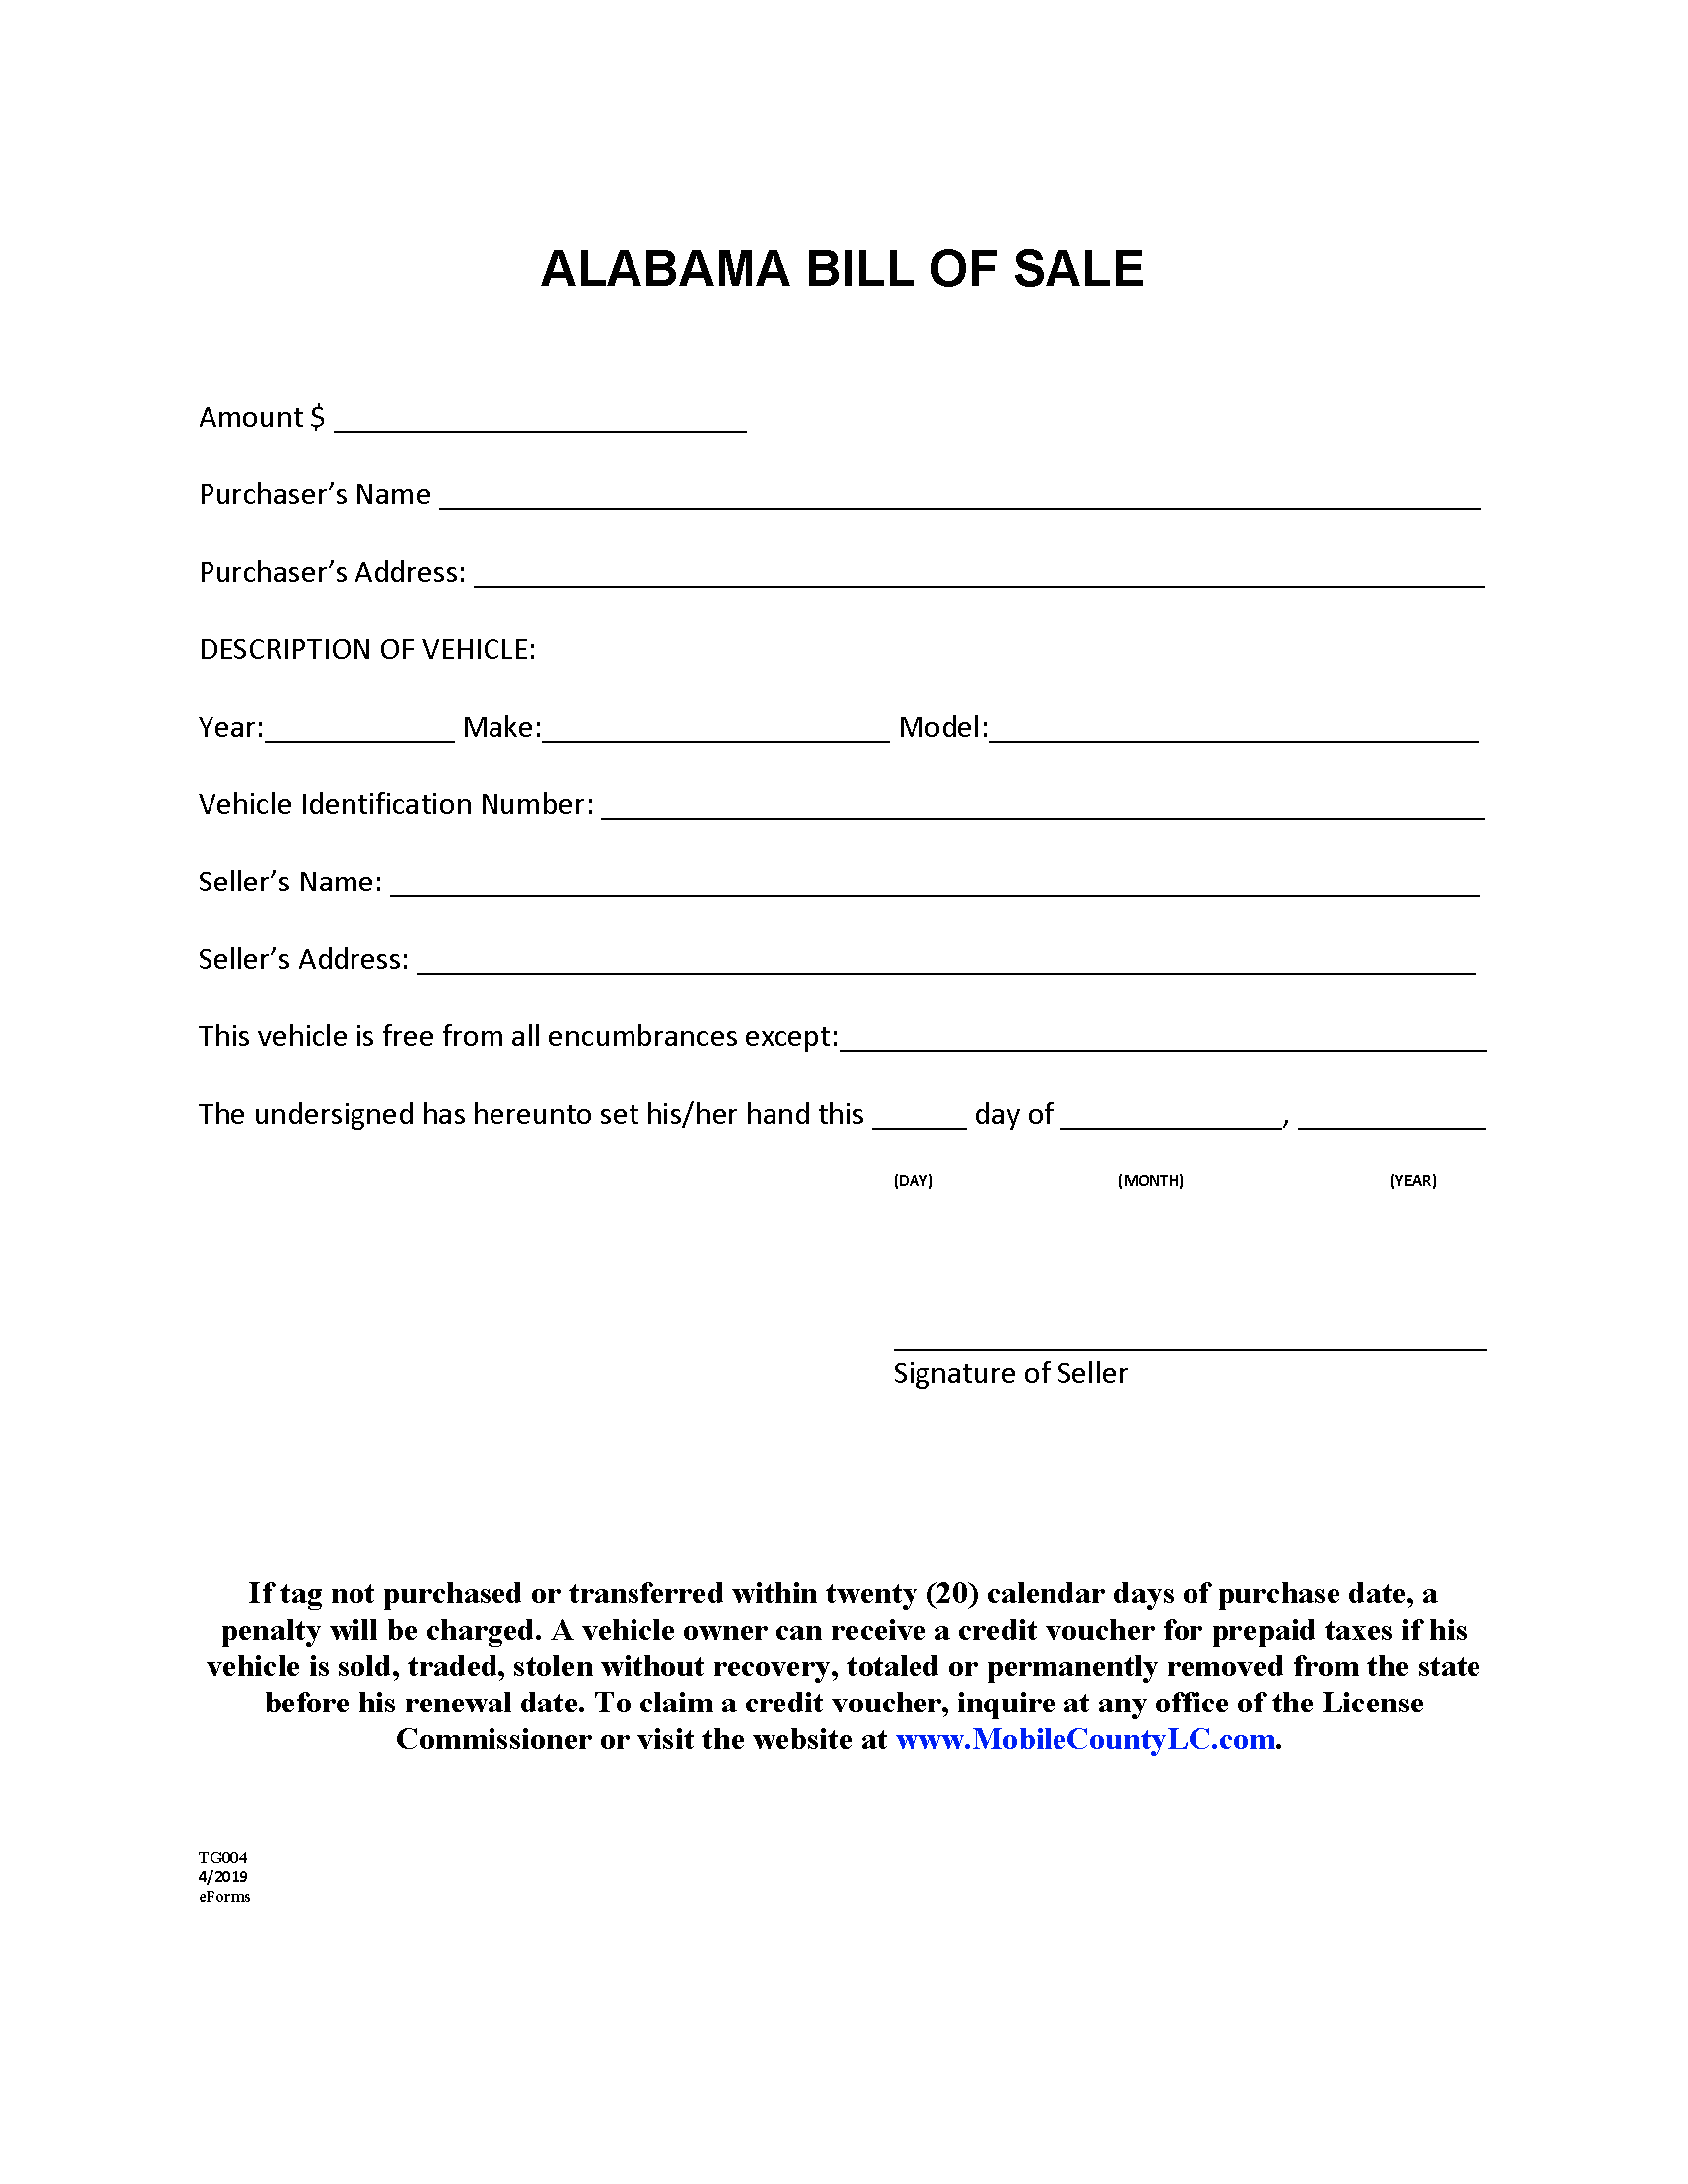 free-alabama-motor-vehicle-bill-of-sale-form-pdf-word-eforms